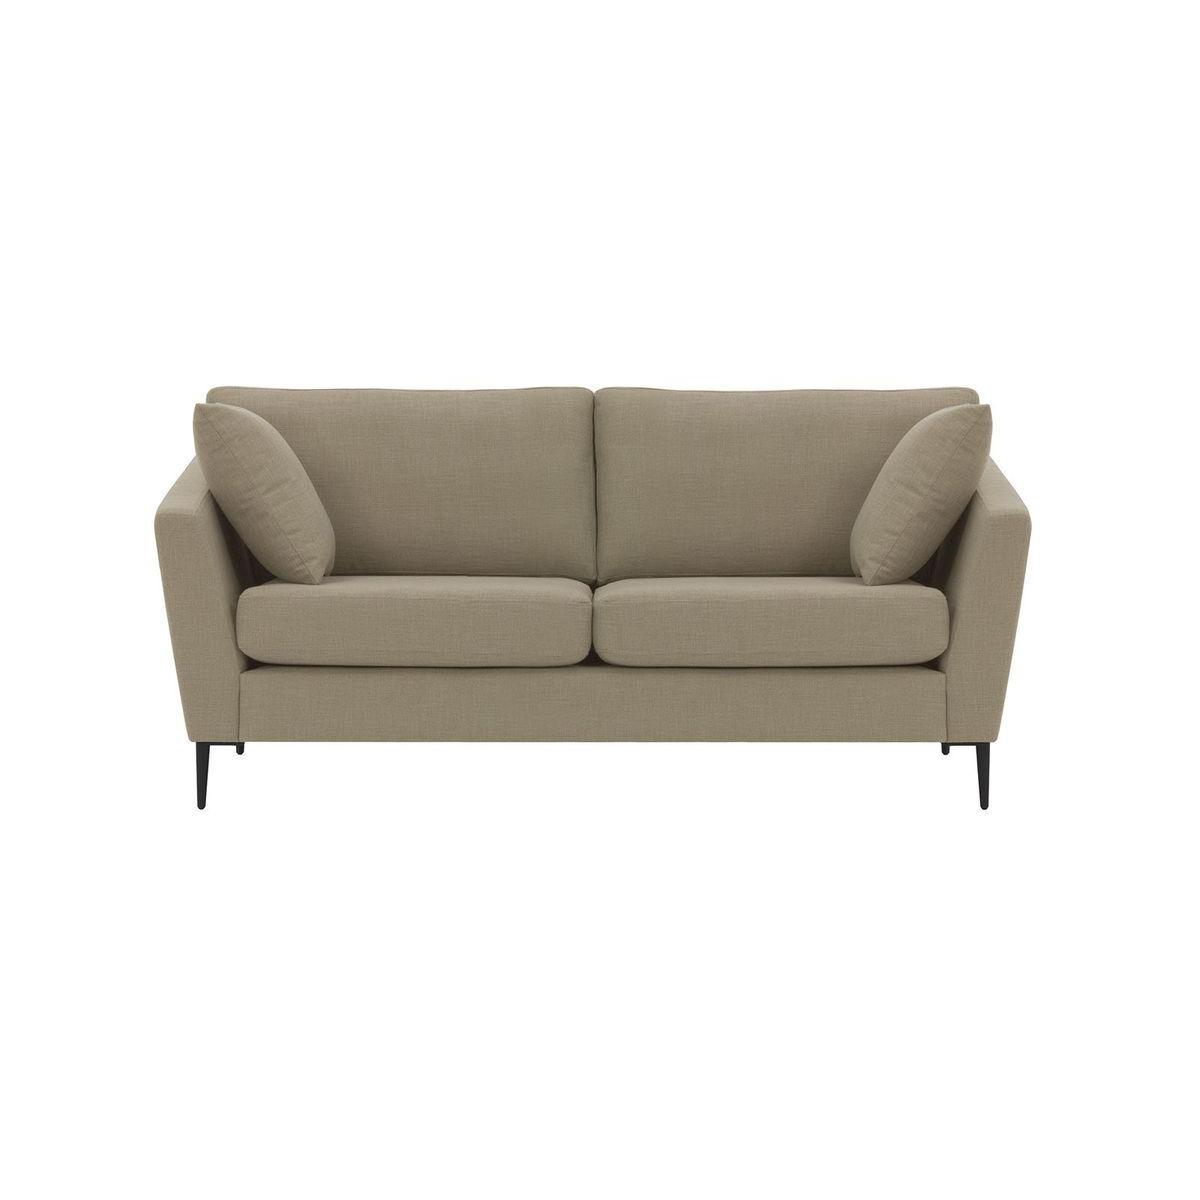 Imani 2,5 Seater Sofa, beige - image 1